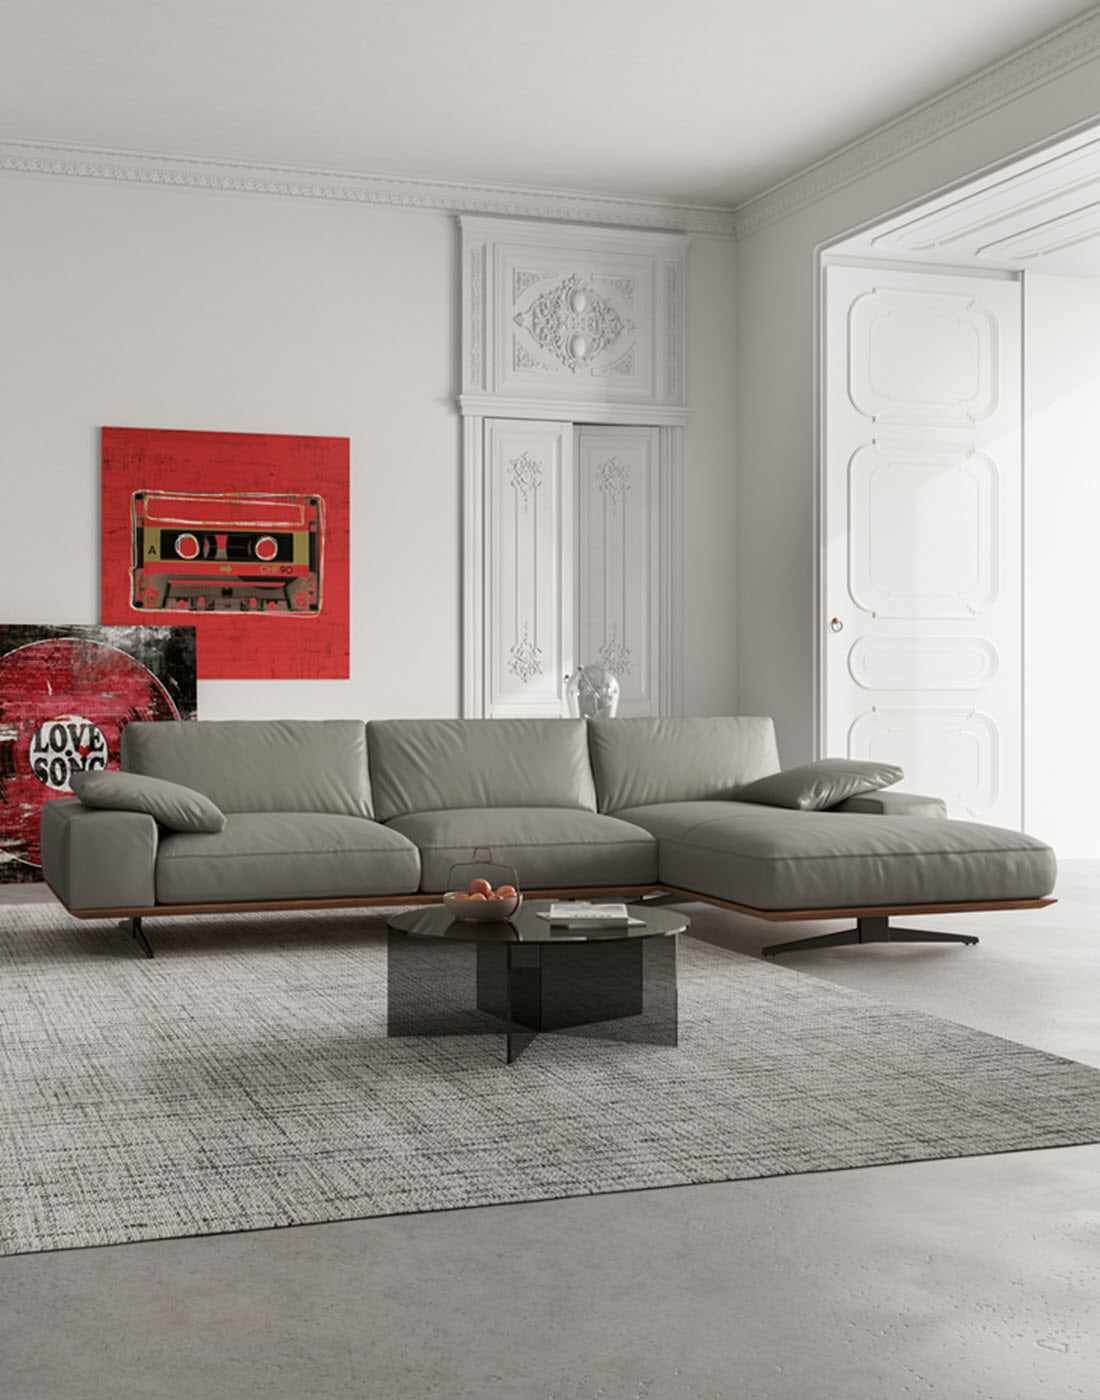 Modloft | The Best Value In Luxury Furniture